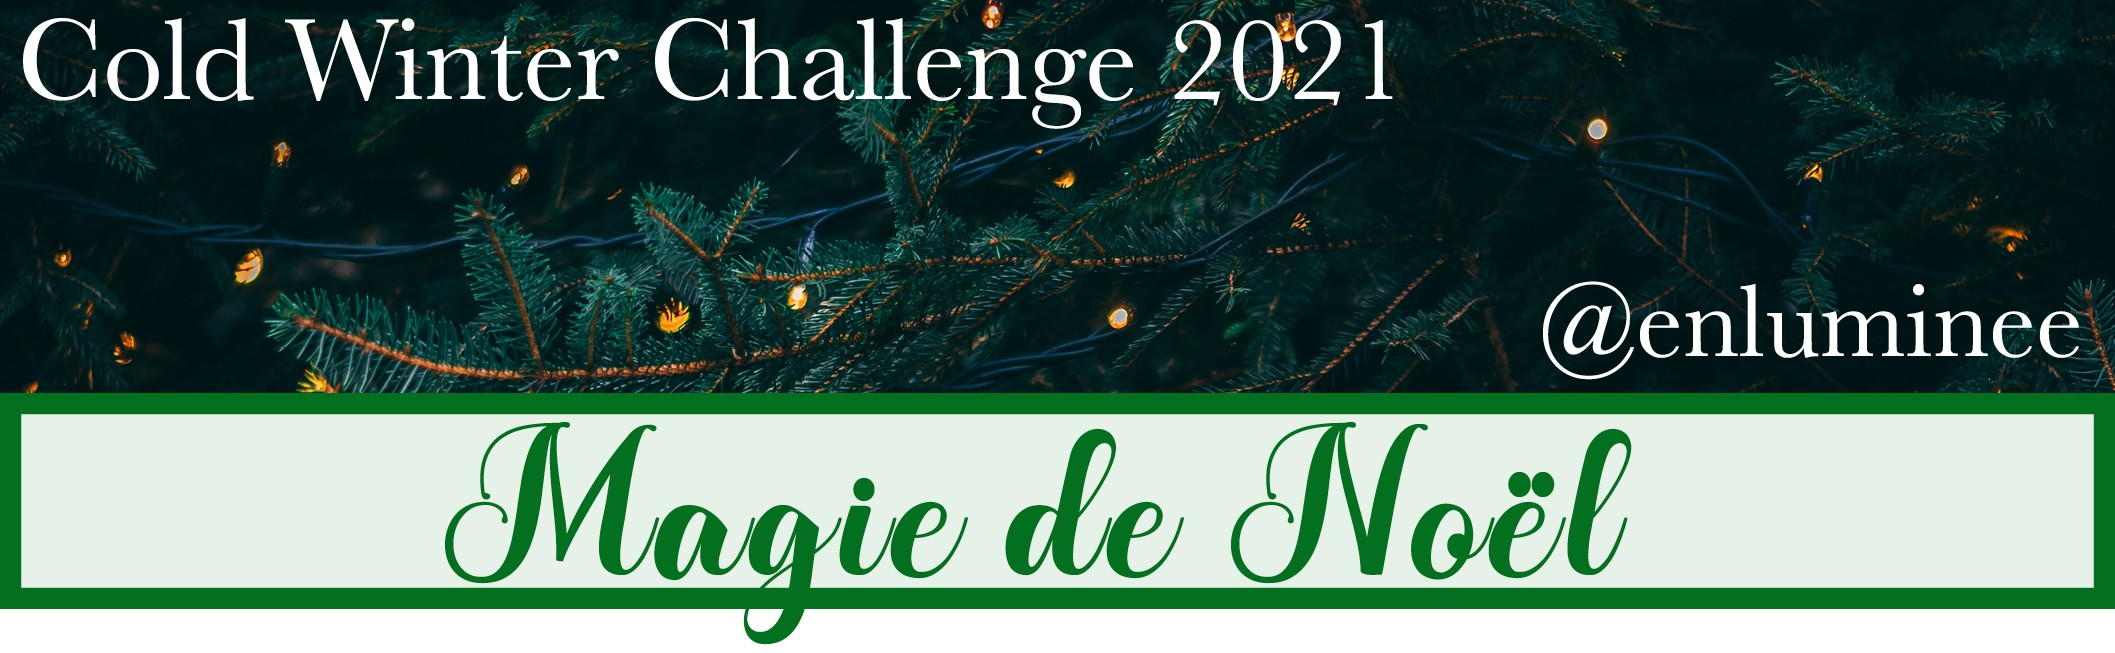 Cold Winter Challenge 2021 - Magie de Noël